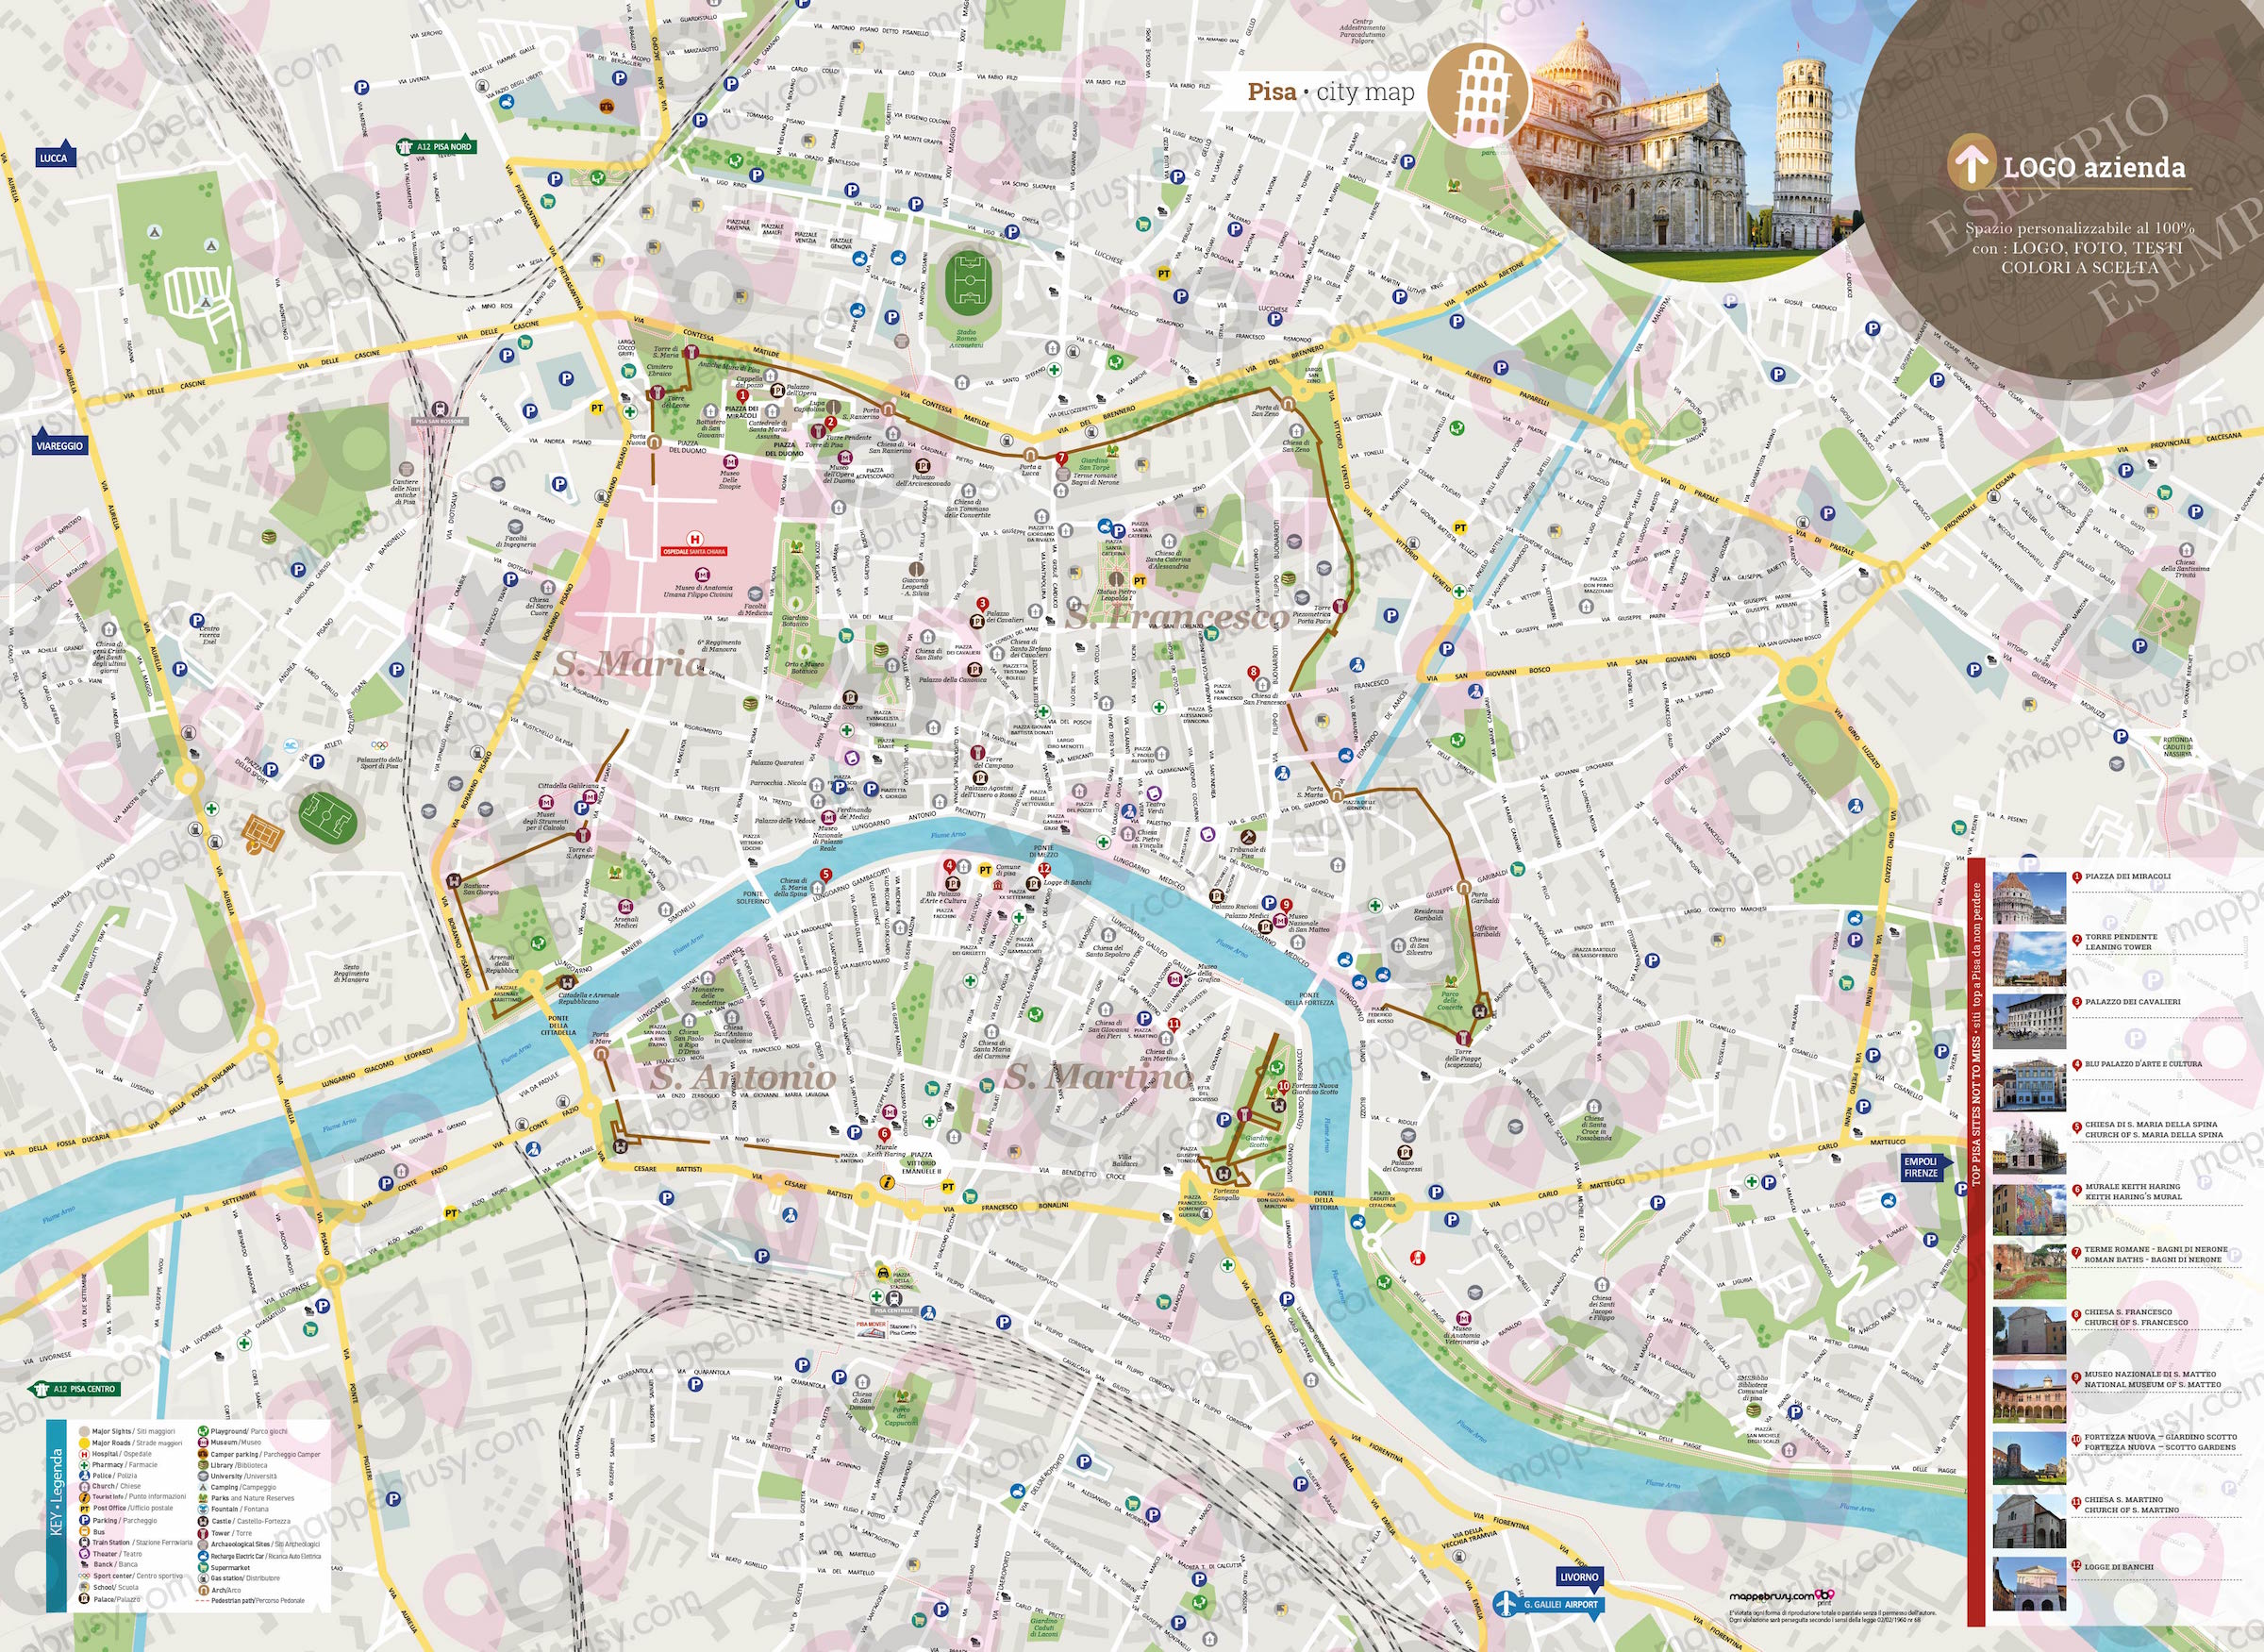 Mappa di Pisa - Pisa city map - mappa Pisa - mappa personalizzata di Pisa - mappa tursitica di Pisa